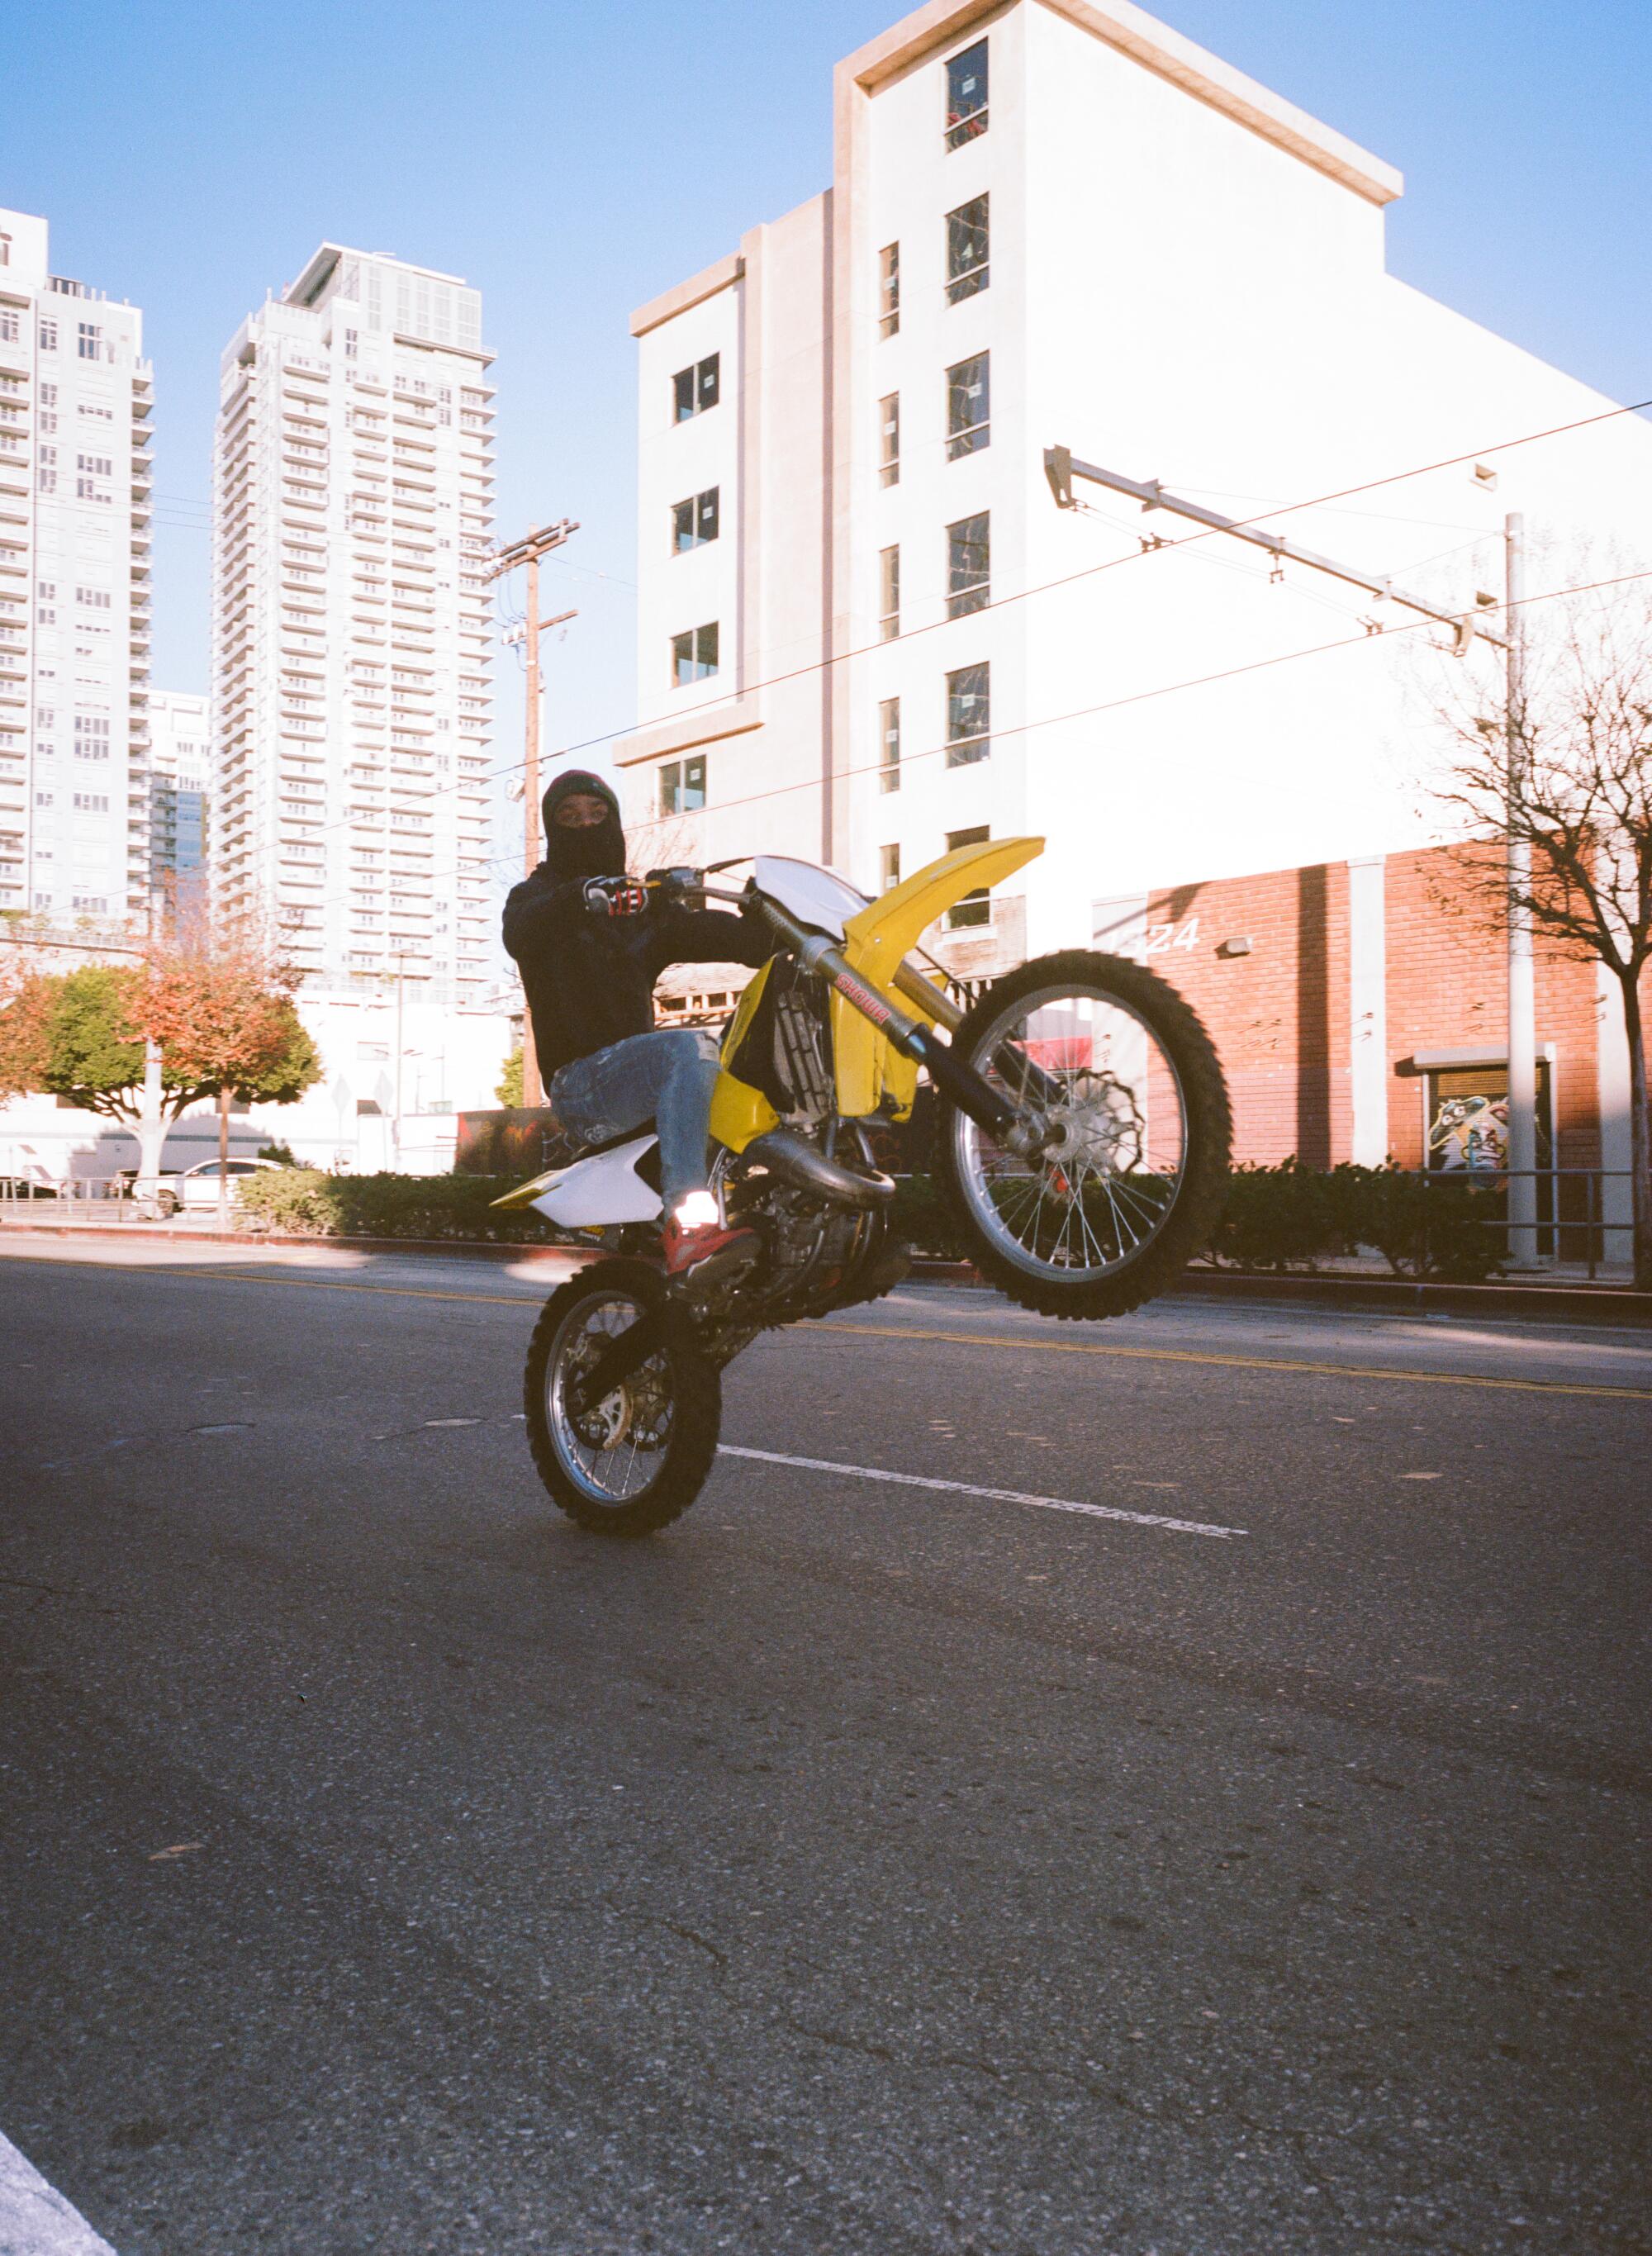 A rider pops a wheelie on a city street